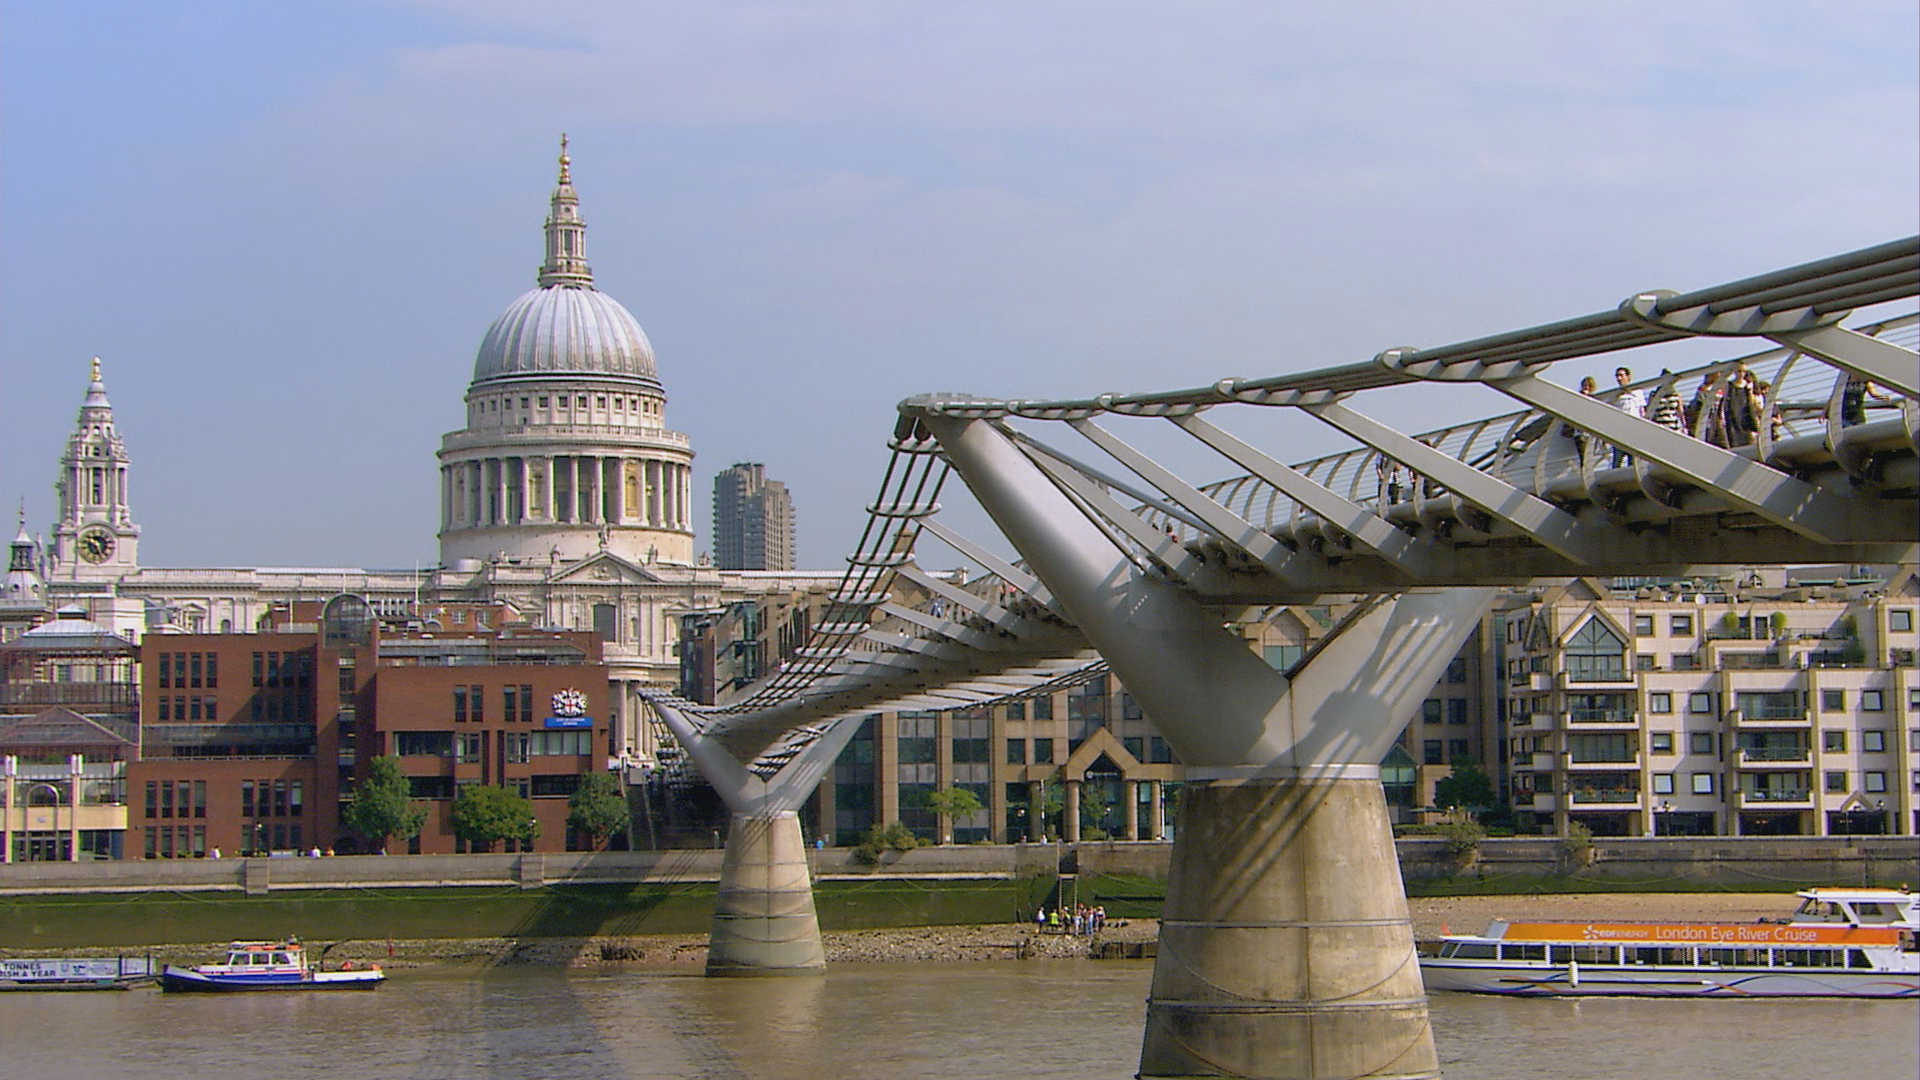 London: The Millennium Bridge